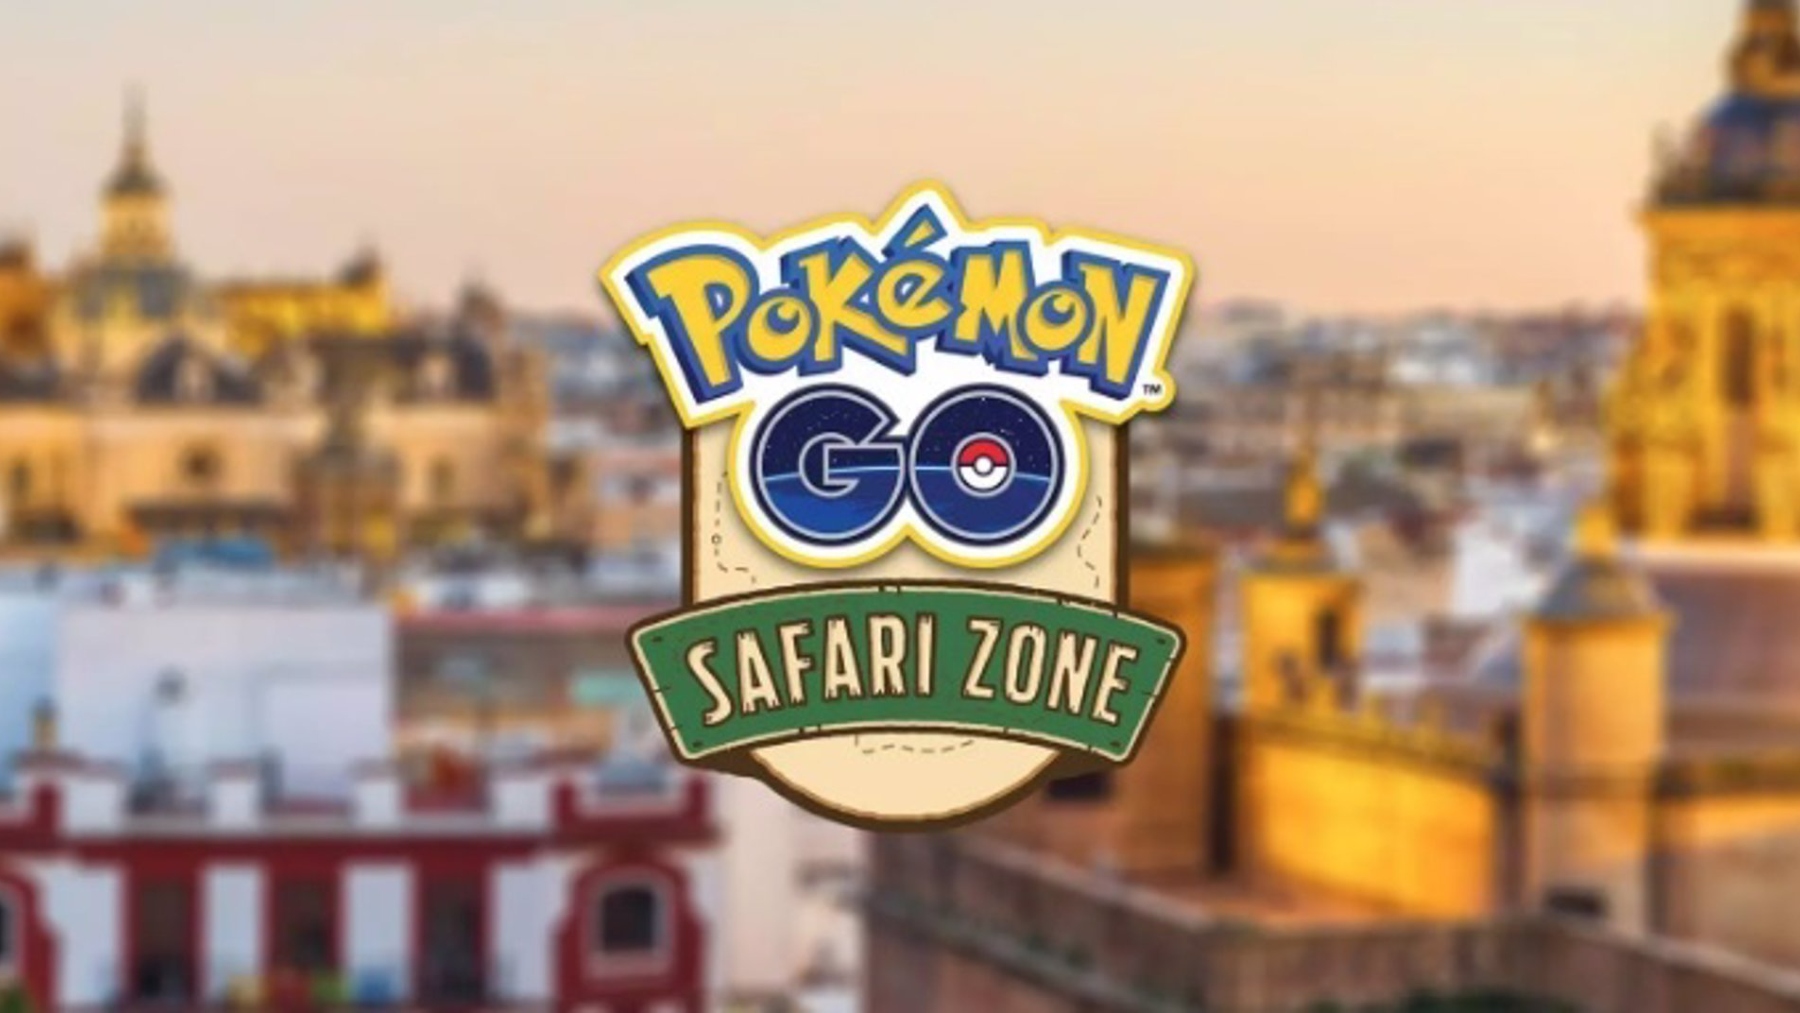 Cartel de la Zona Safari celebrada en mayo en Sevilla (NIANTIC LABS).